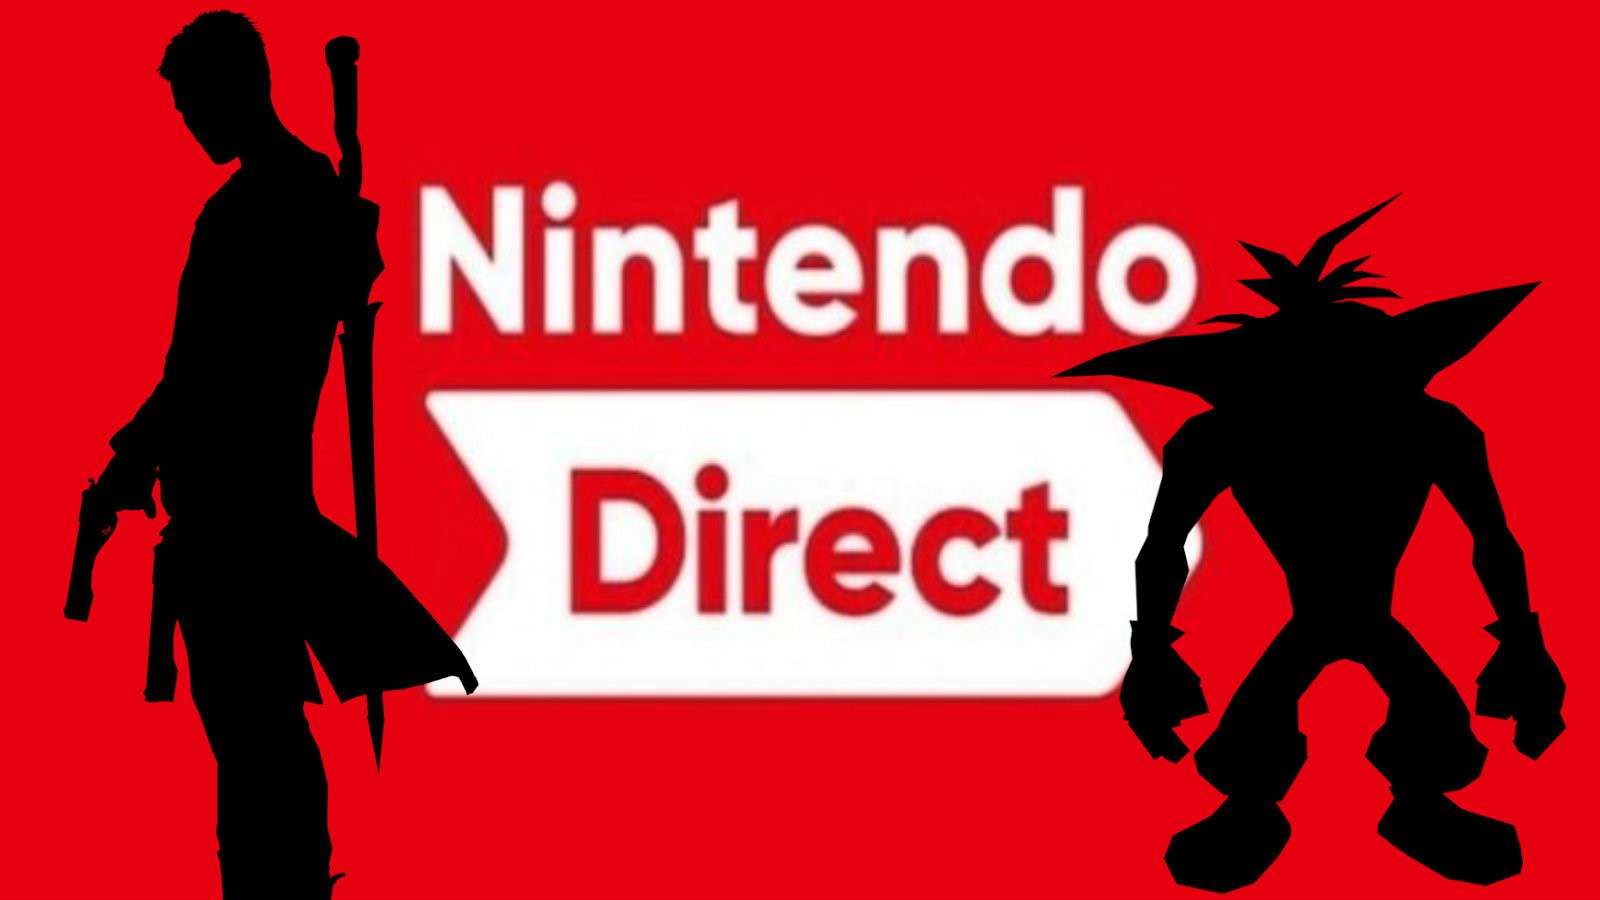 Dante and Crash Bandicoot in a Nintendo Direct